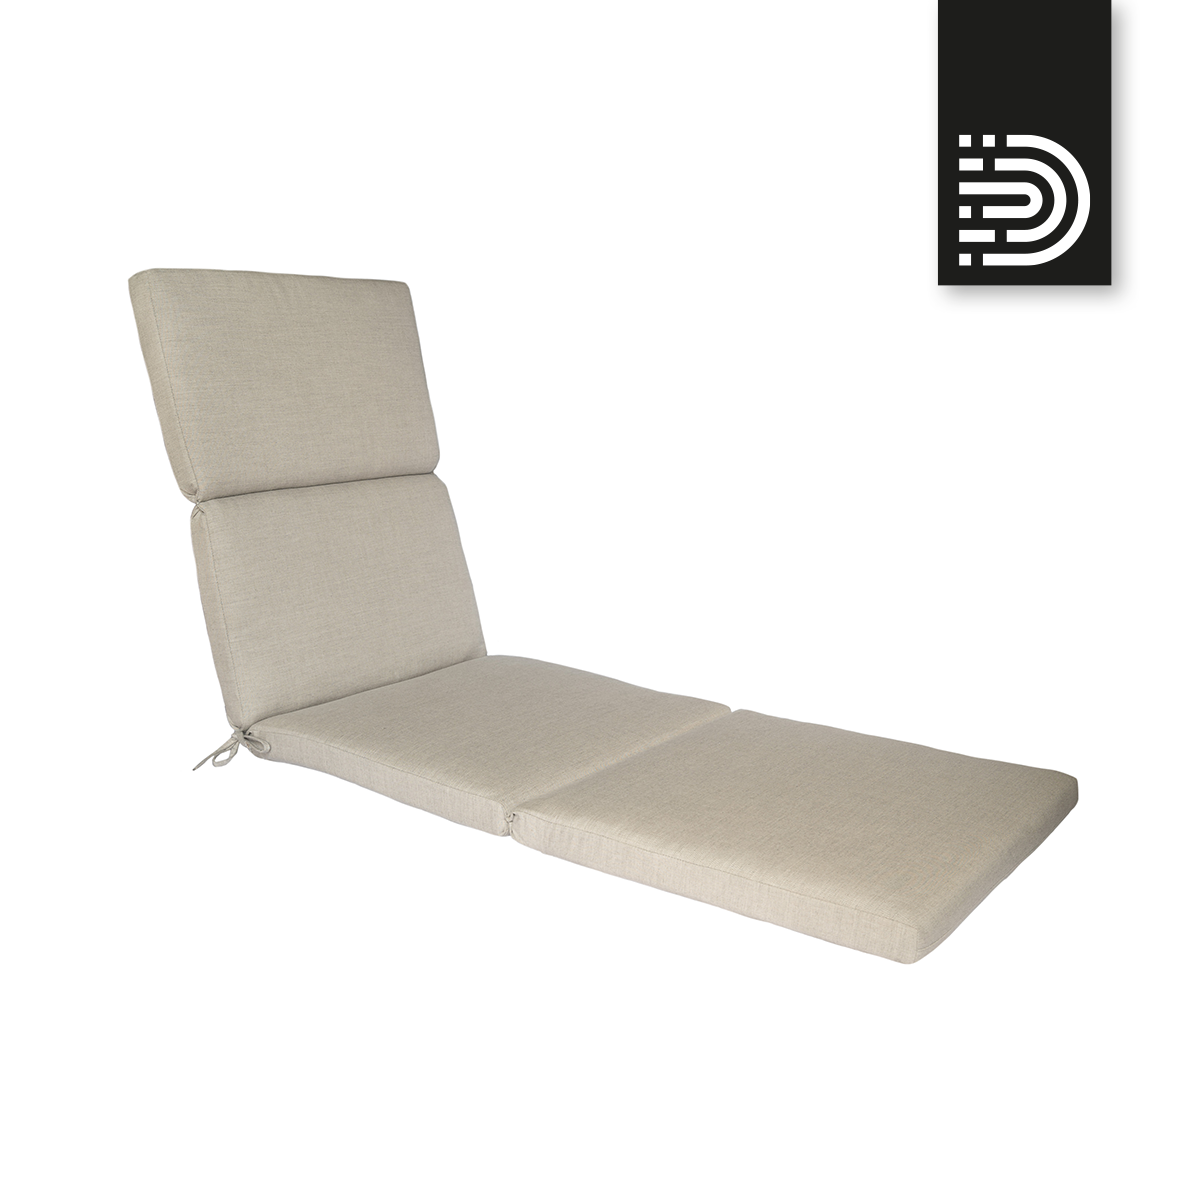 LP01 Chaise Lounge Cushion Pad - Cast Ash 40428-0000